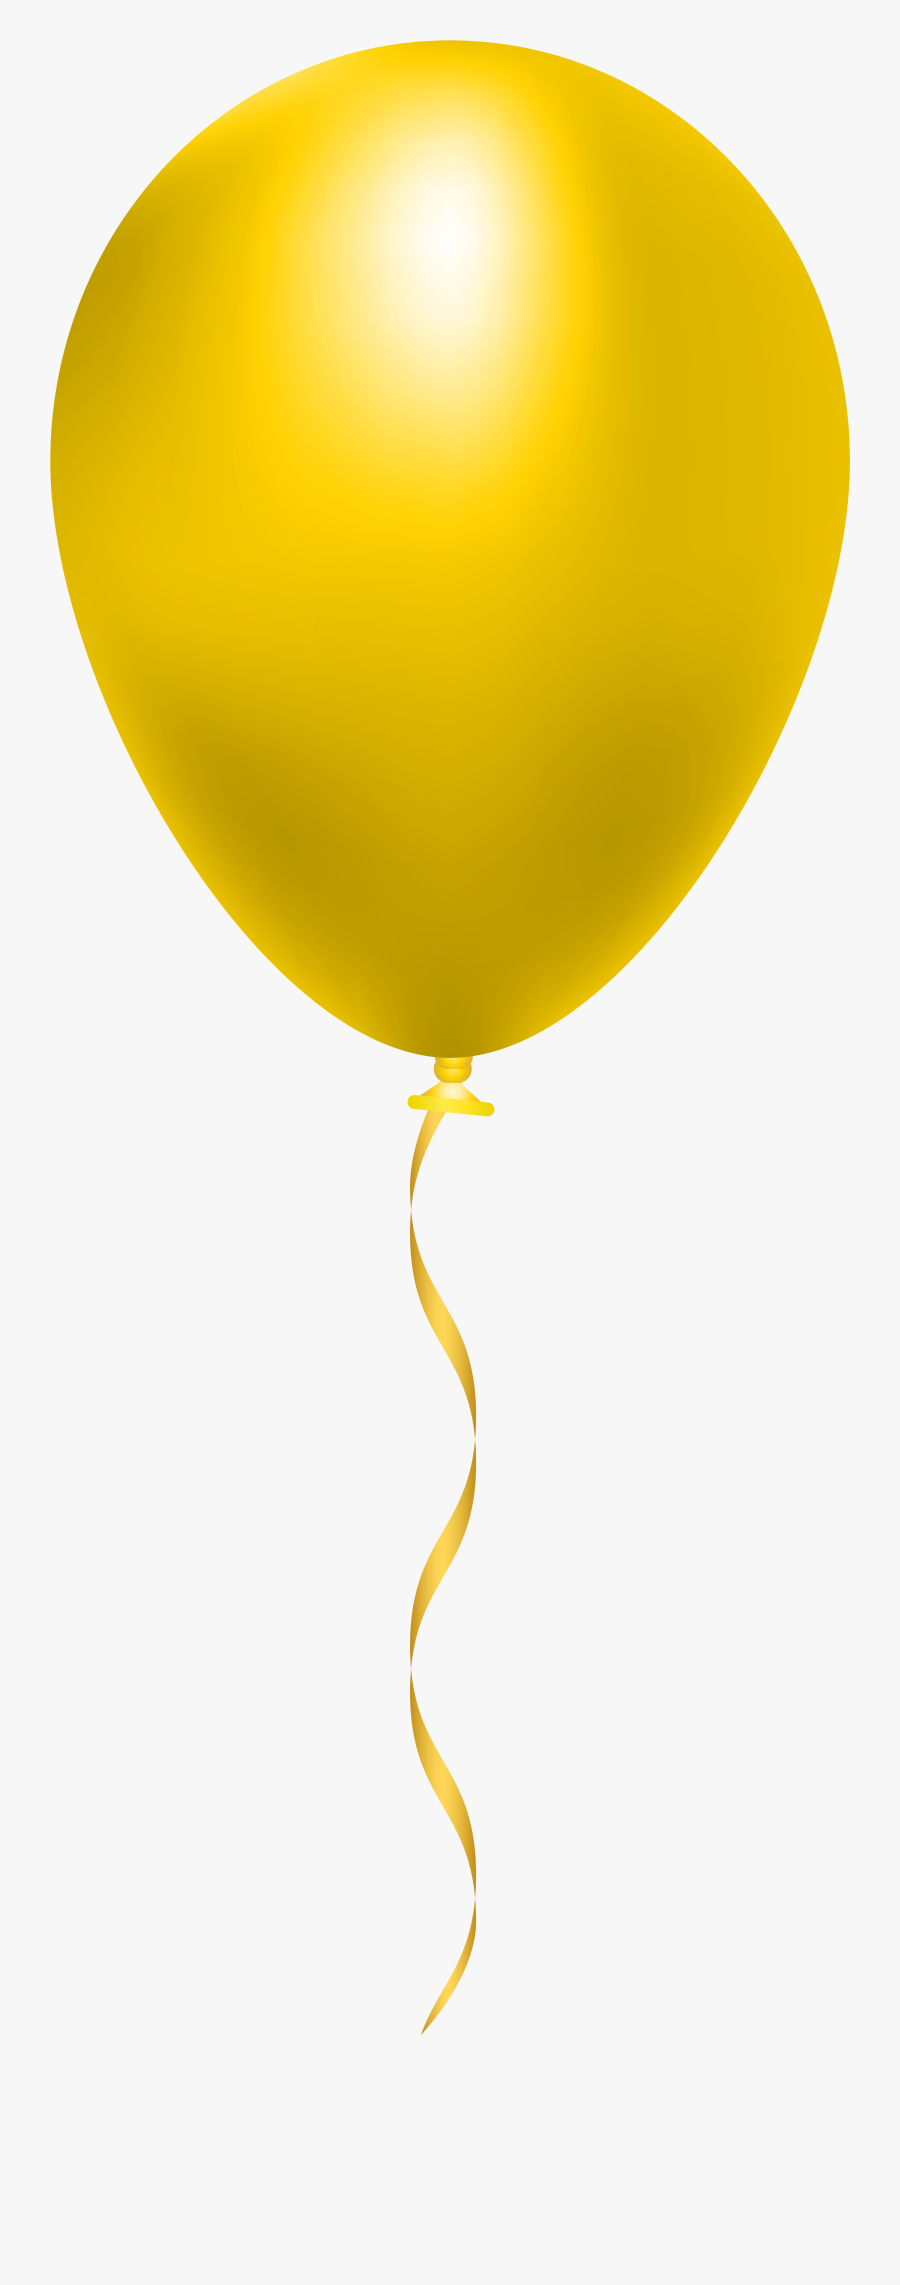 Transparent Baloon Clipart - Yellow Balloon Transparent Background, Transparent Clipart